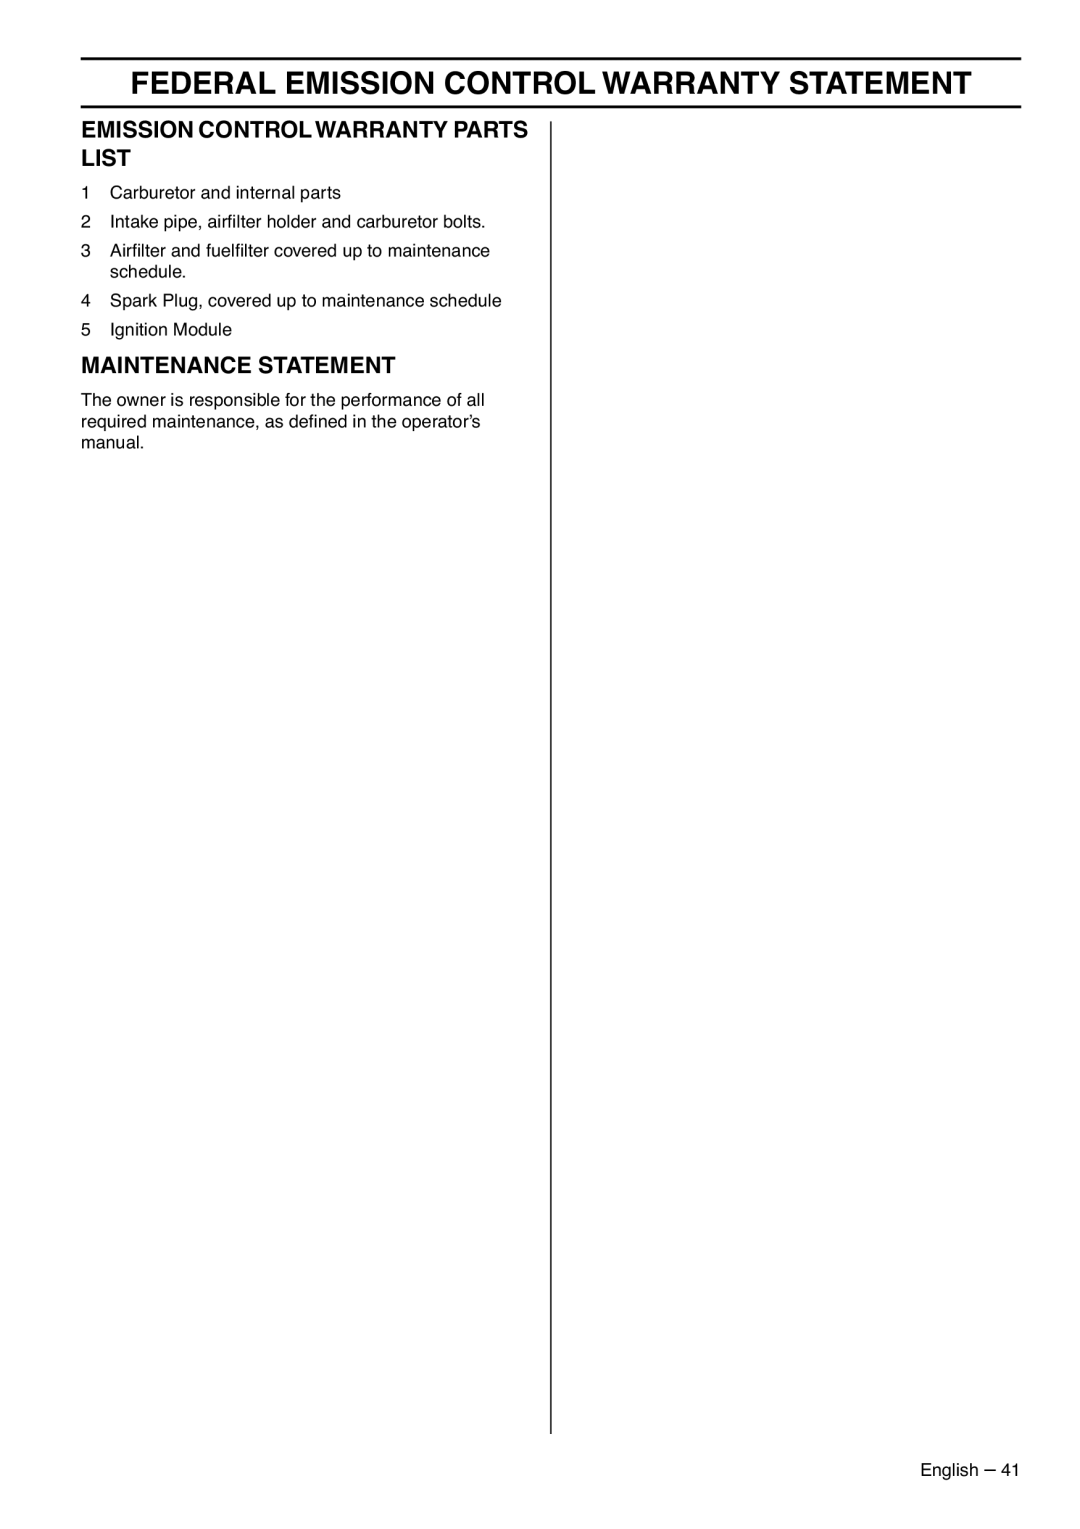 Husqvarna 1153183-95 manual Emission Controlwarranty Parts List, Maintenance Statement 